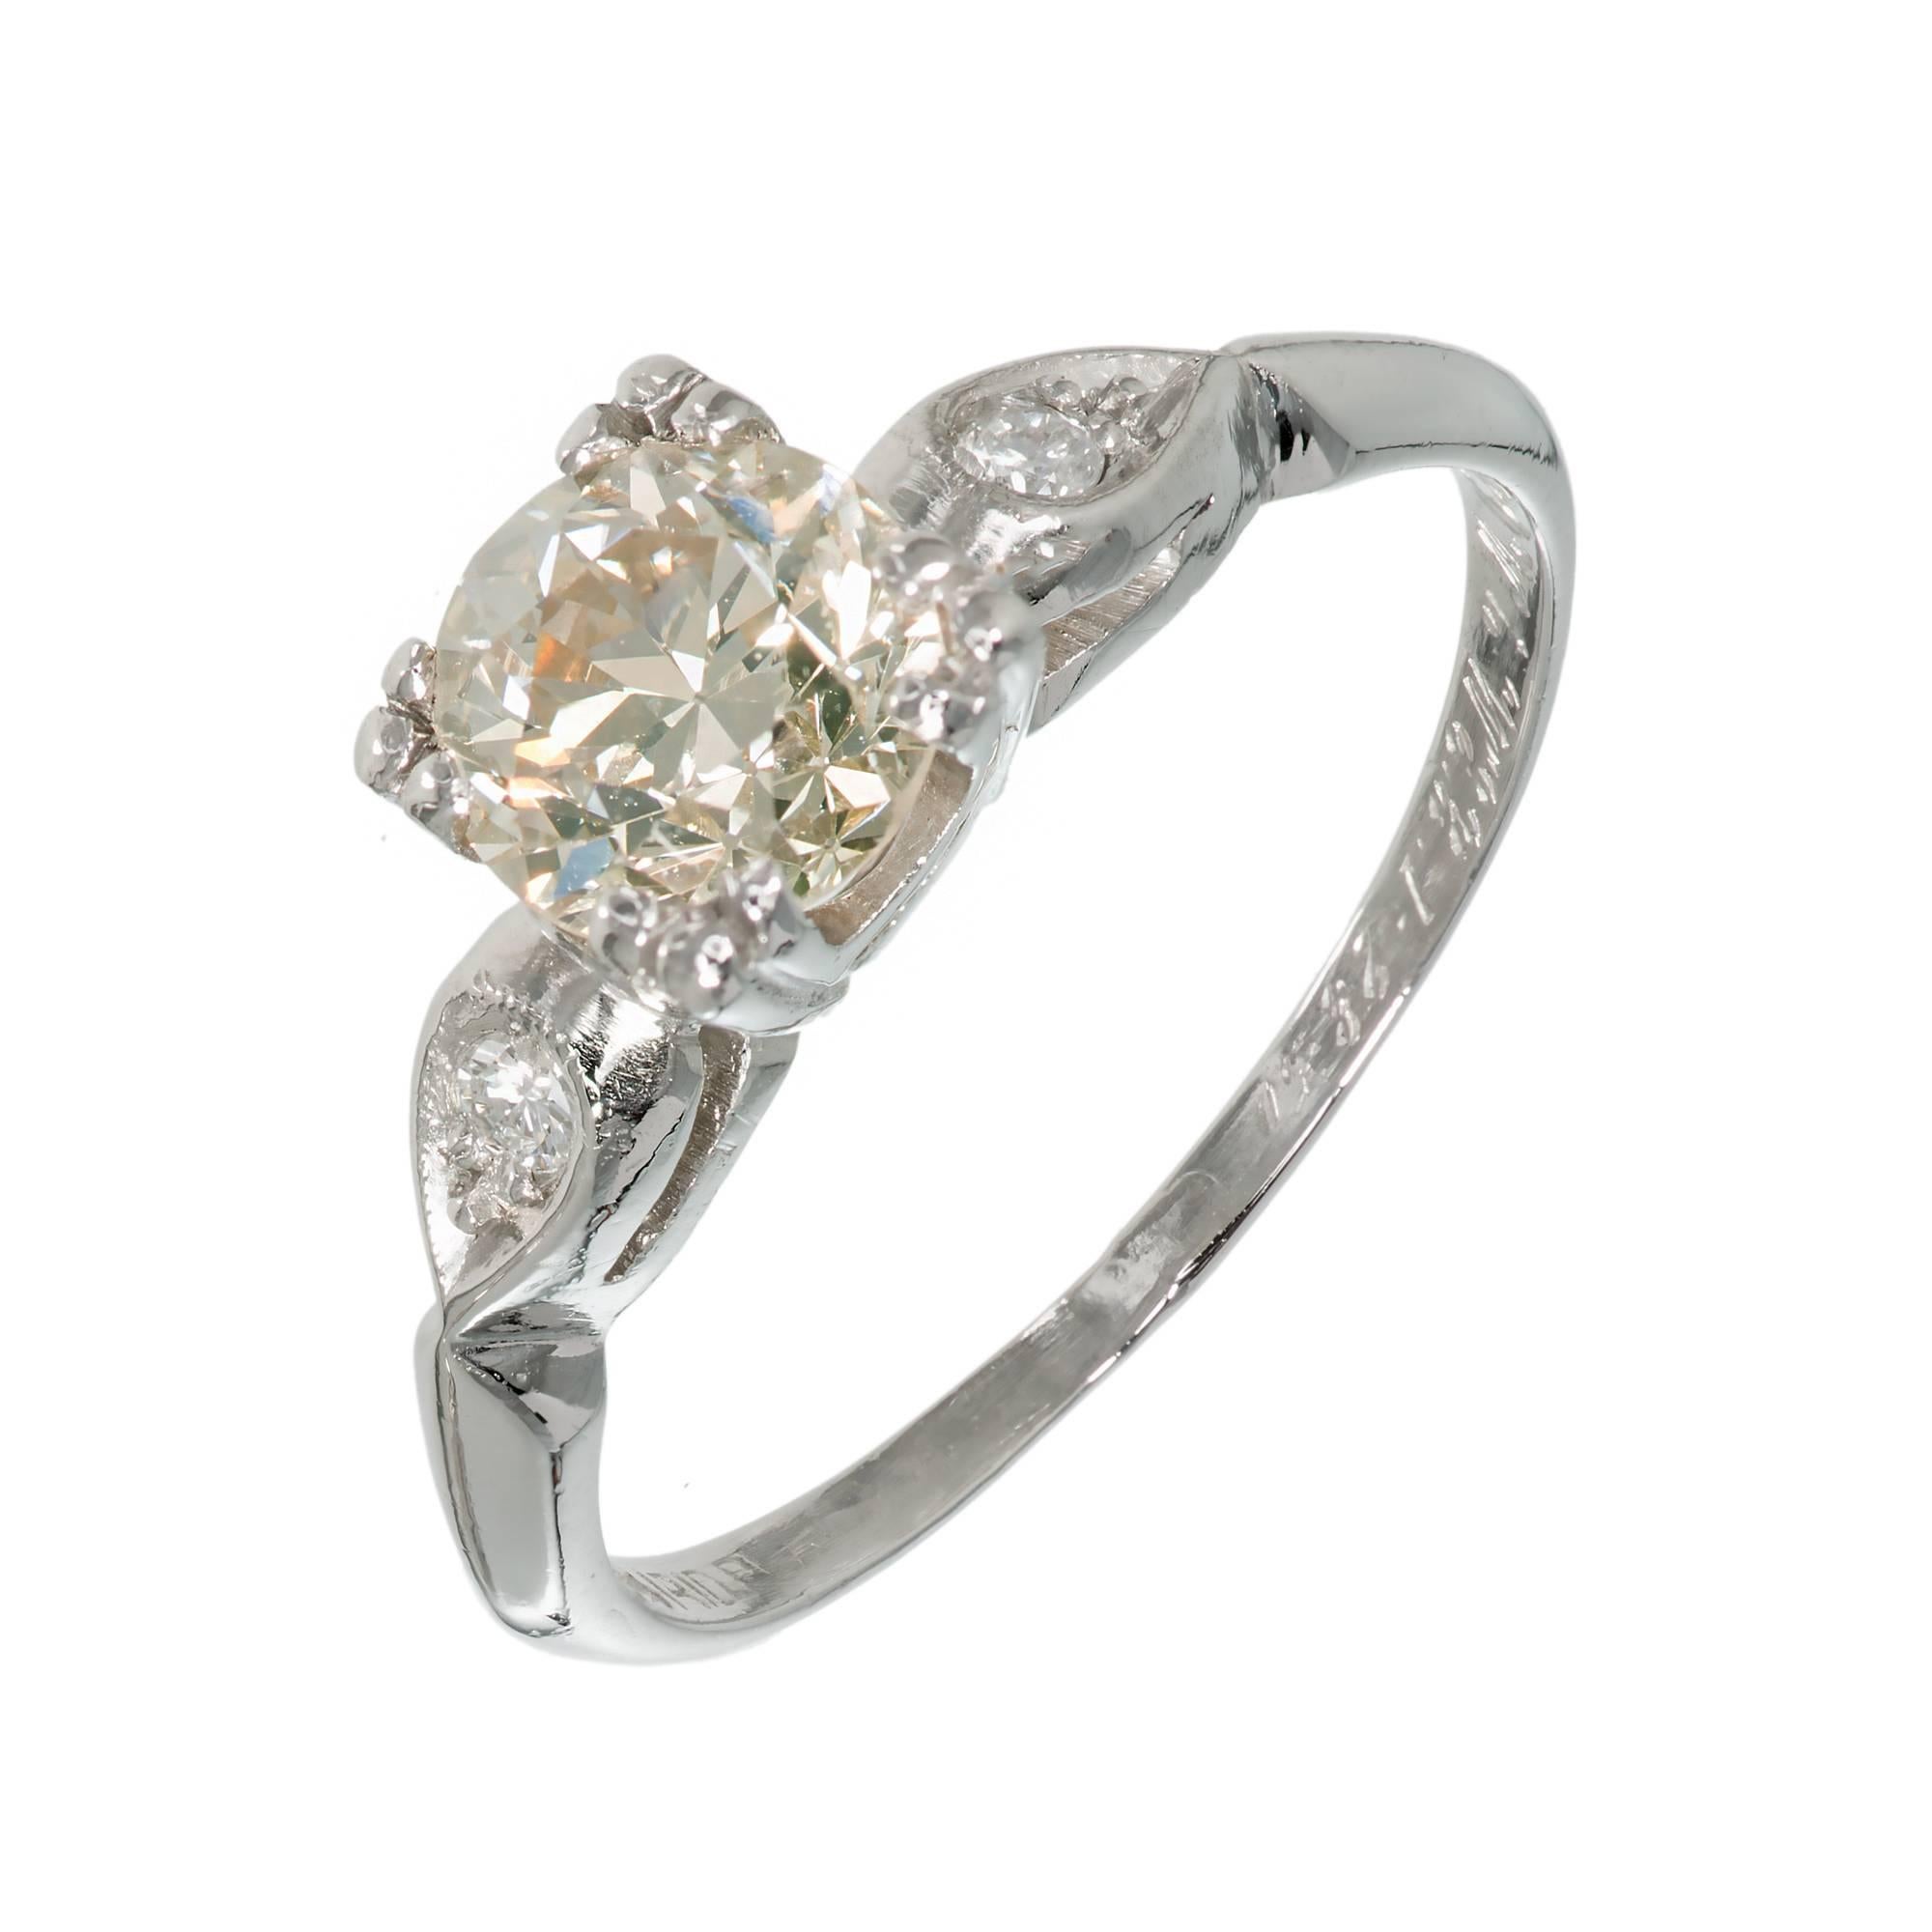 European cut original Art Deco 1920-1929  handmade Platinum diamond three-stone engagement ring.

1 GIA certified #2125984880 diamond, approx. total weight .93cts. O to P color range, VS2 clarity late European cut
2 full cut diamonds, approx. total